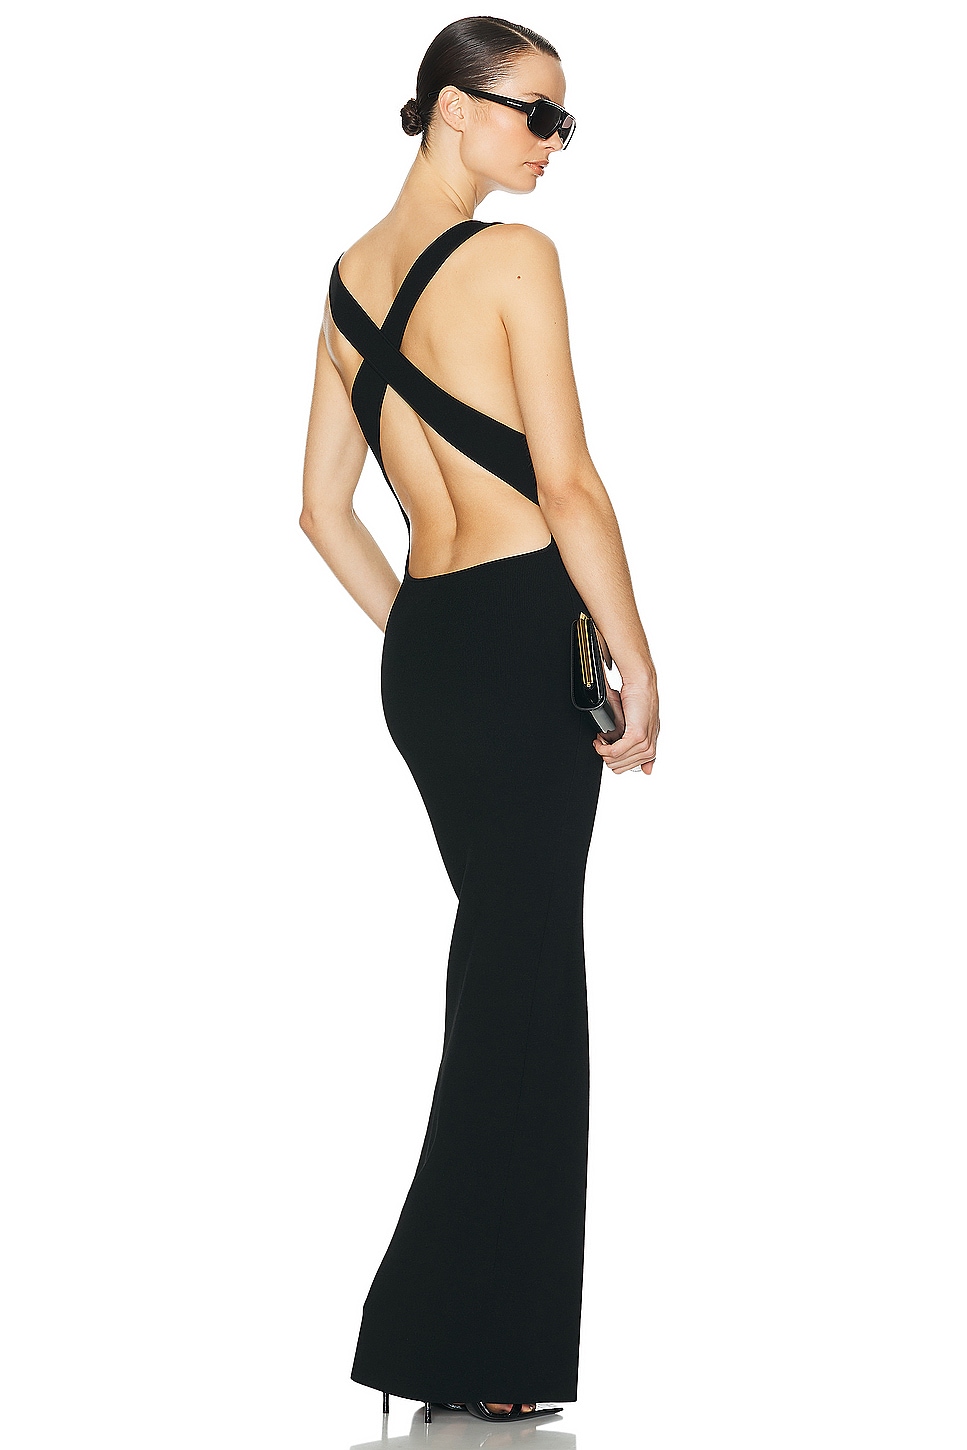 Ianli Knit Dress Helsa $298 